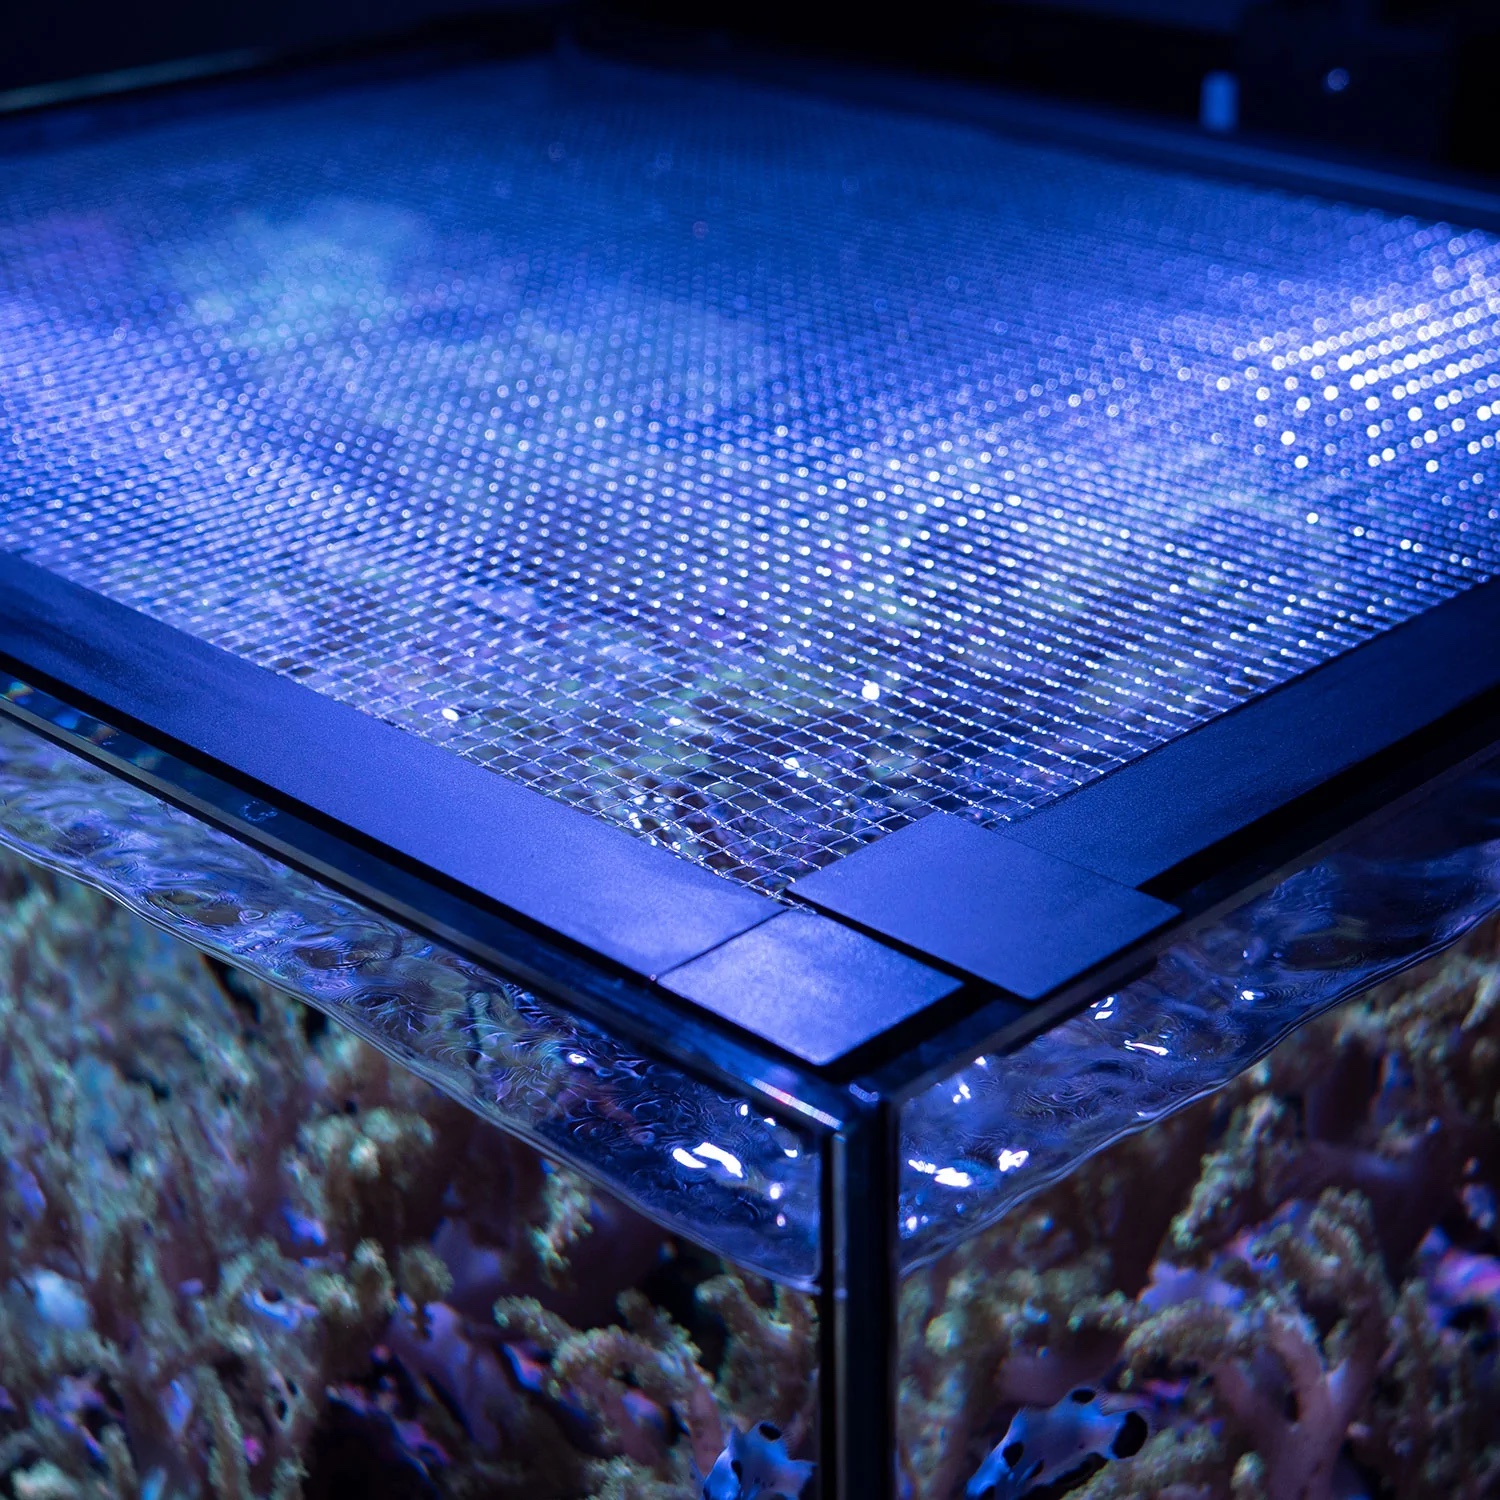 Plastic Starter Aquarium Fish Tank Carry Handle Lid Extra Large 29